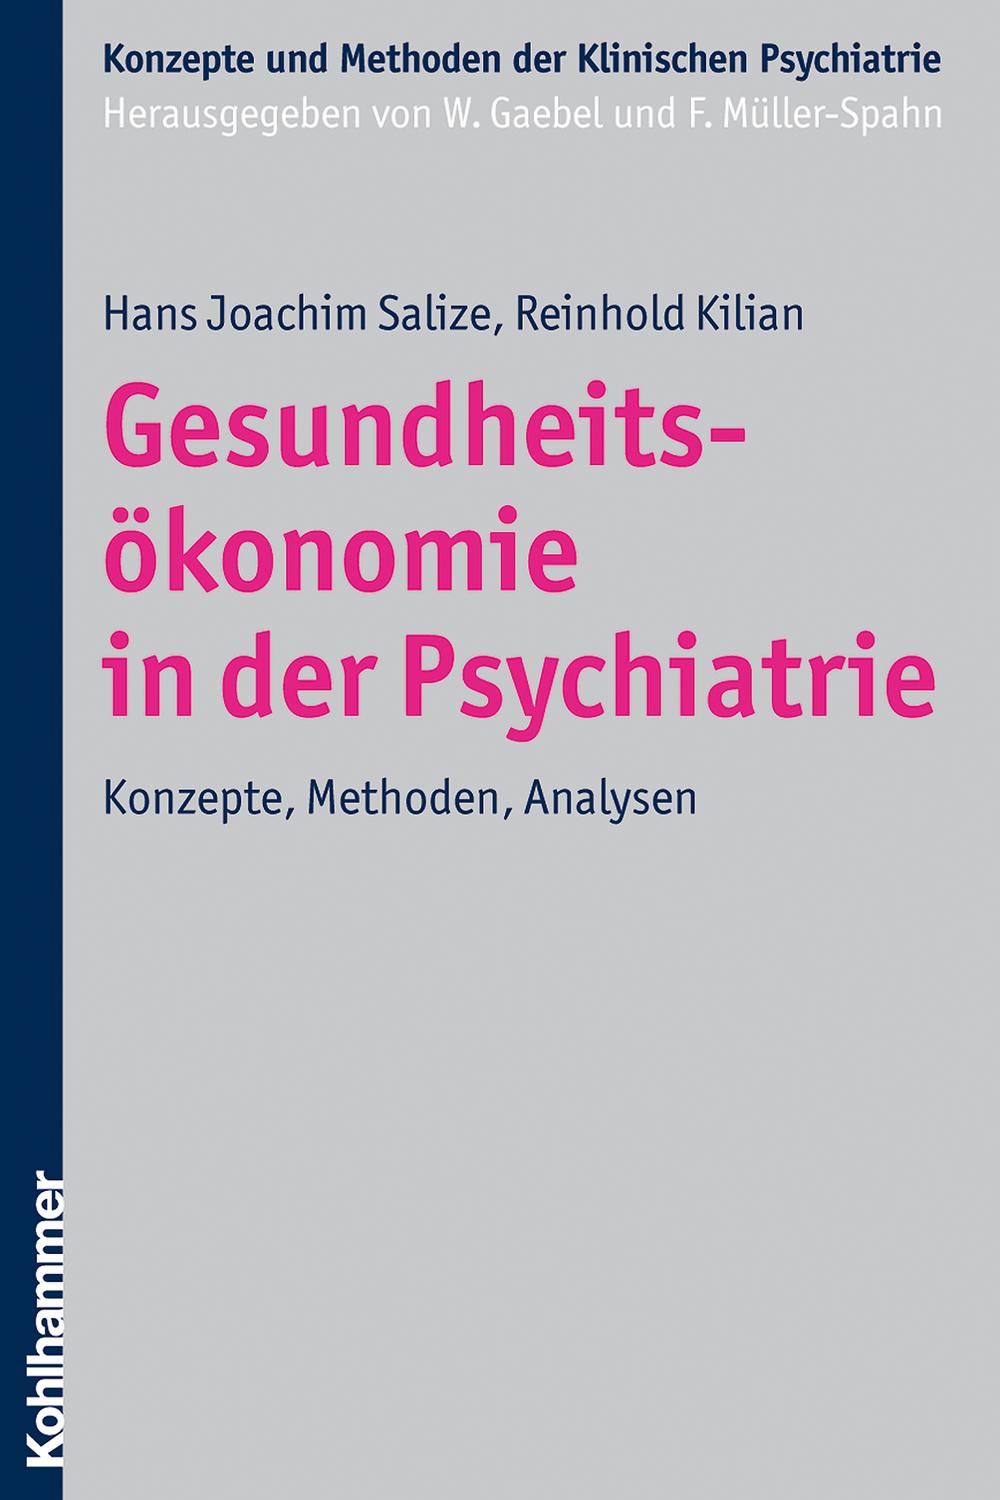 Gesundheitsökonomie in der Psychiatrie - Hans Joachim Salize, Reinhold Kilian, Wolfgang Gaebel, Franz Müller-Spahn